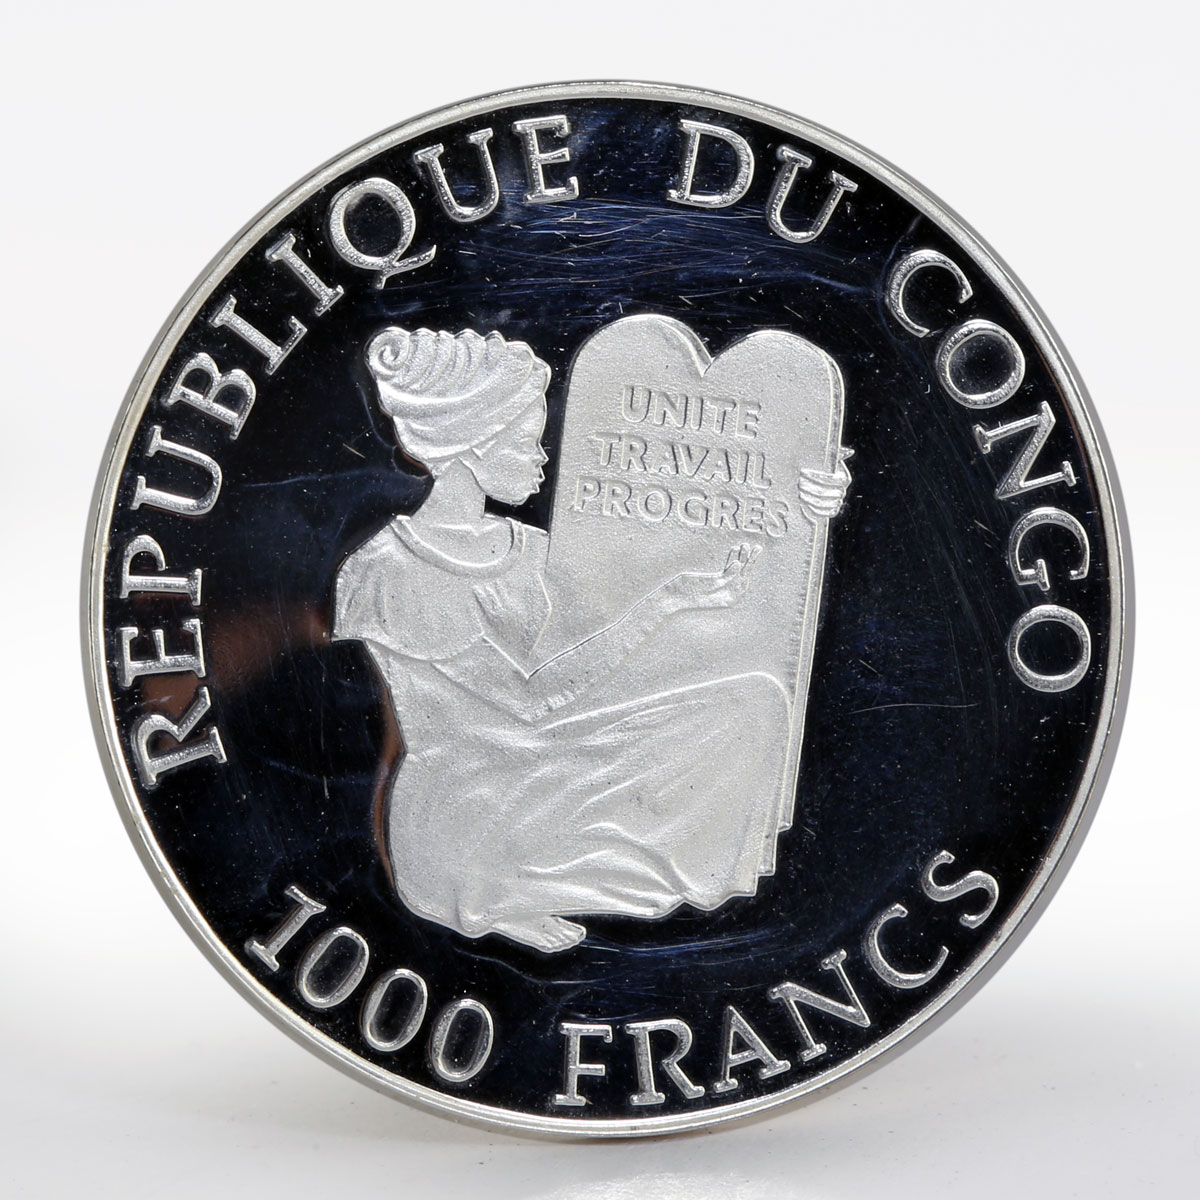 Congo 1000 francs Jeanne d'Arc proof silver coin 2005